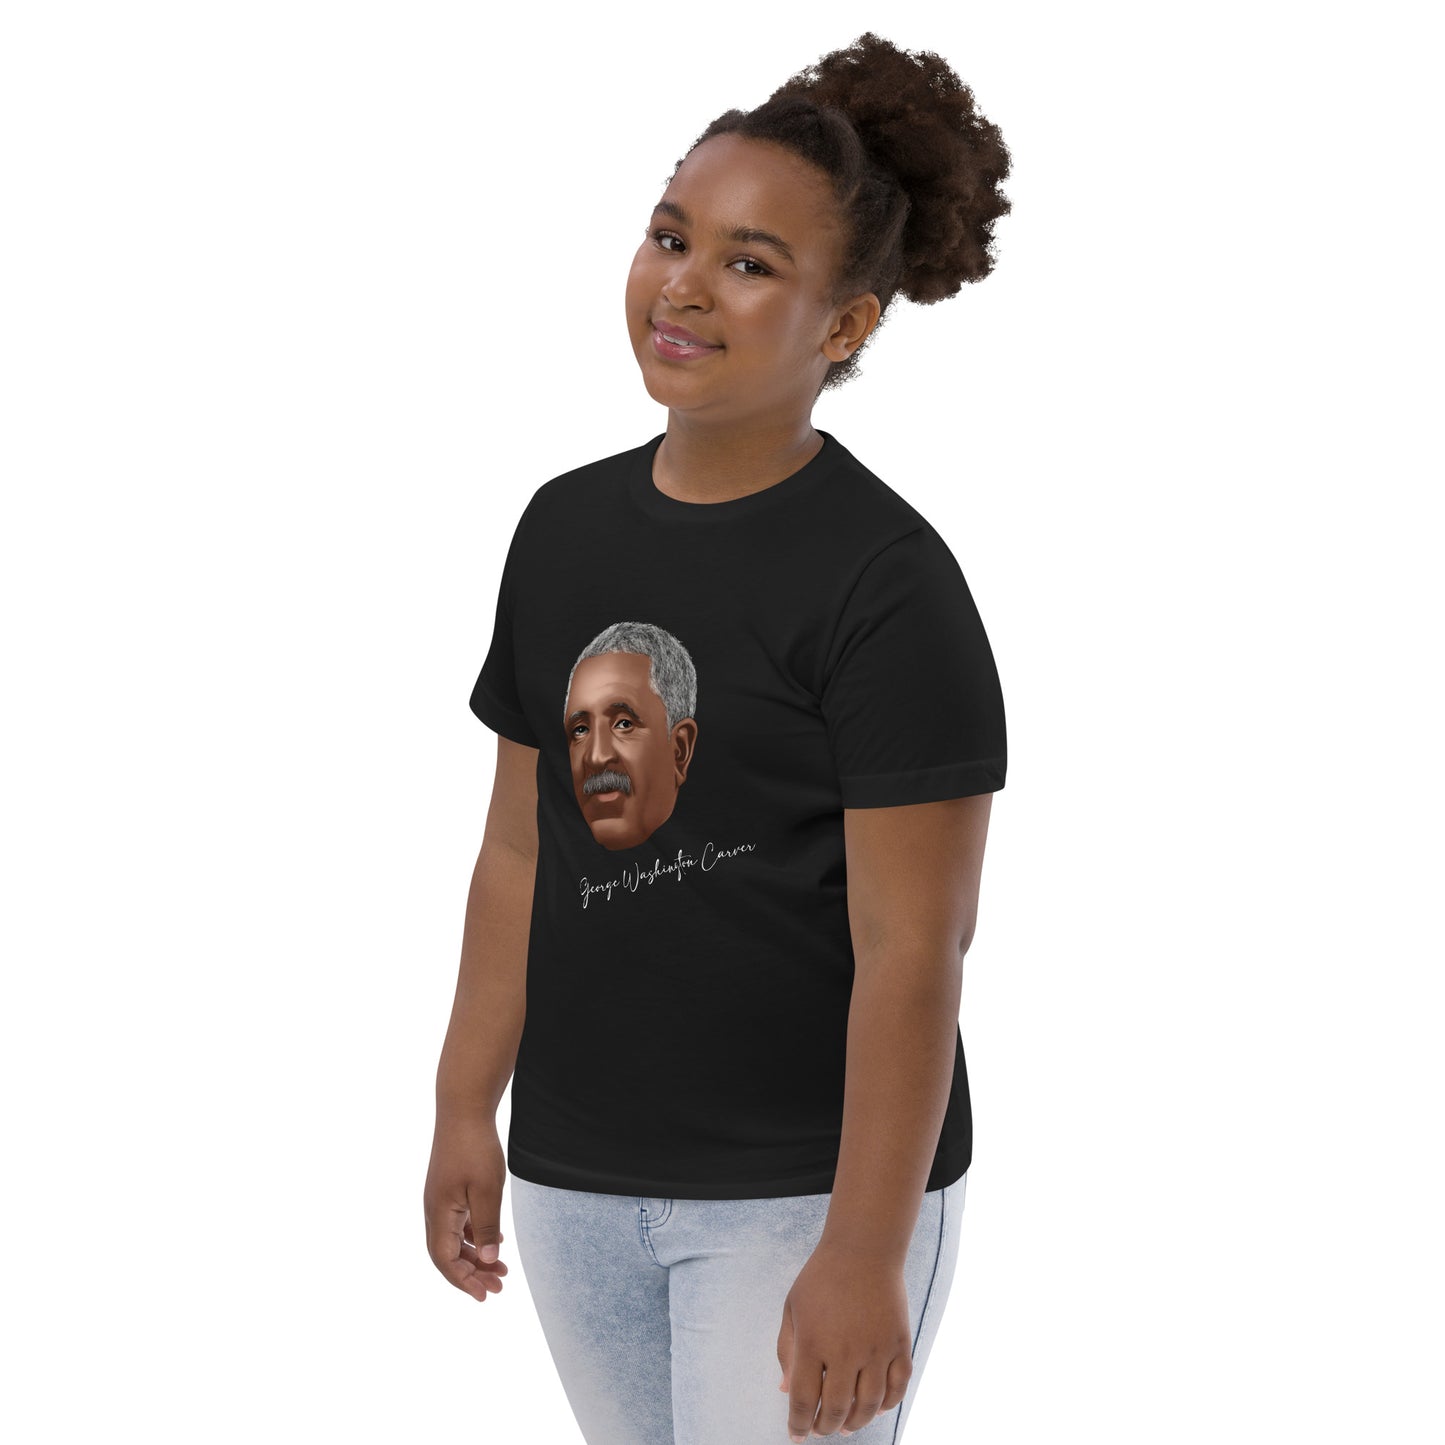 George Washington Carver Youth jersey t-shirt